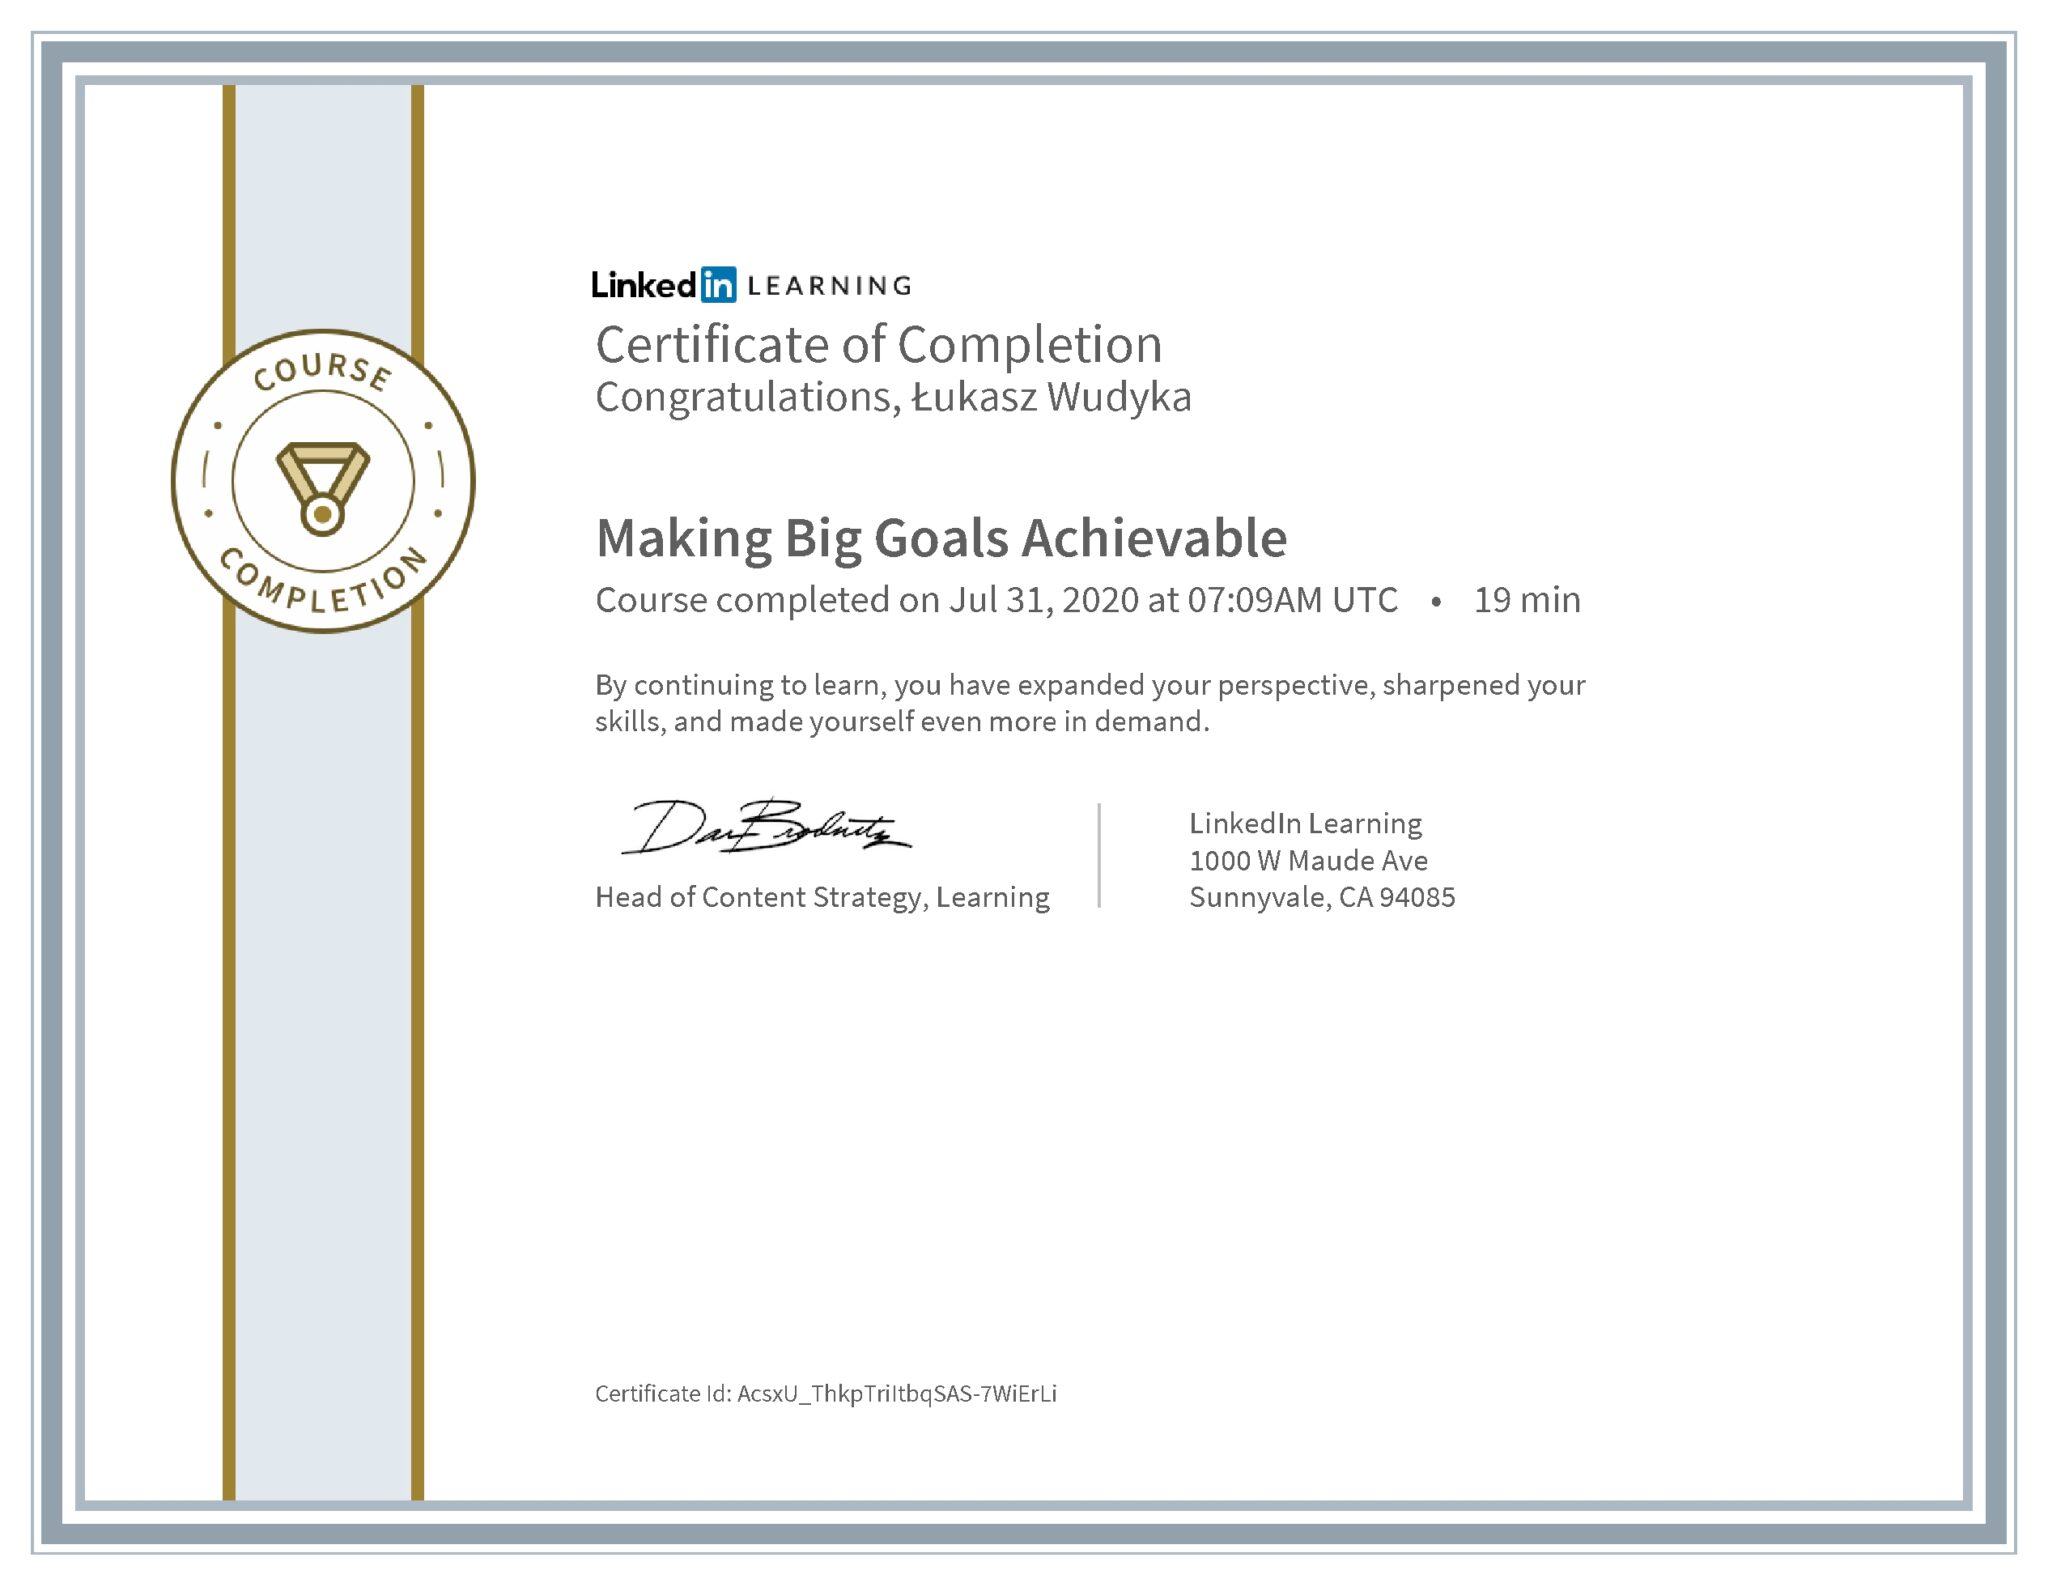 Łukasz Wudyka certyfikat LinkedIn Making Big Goals Achievable